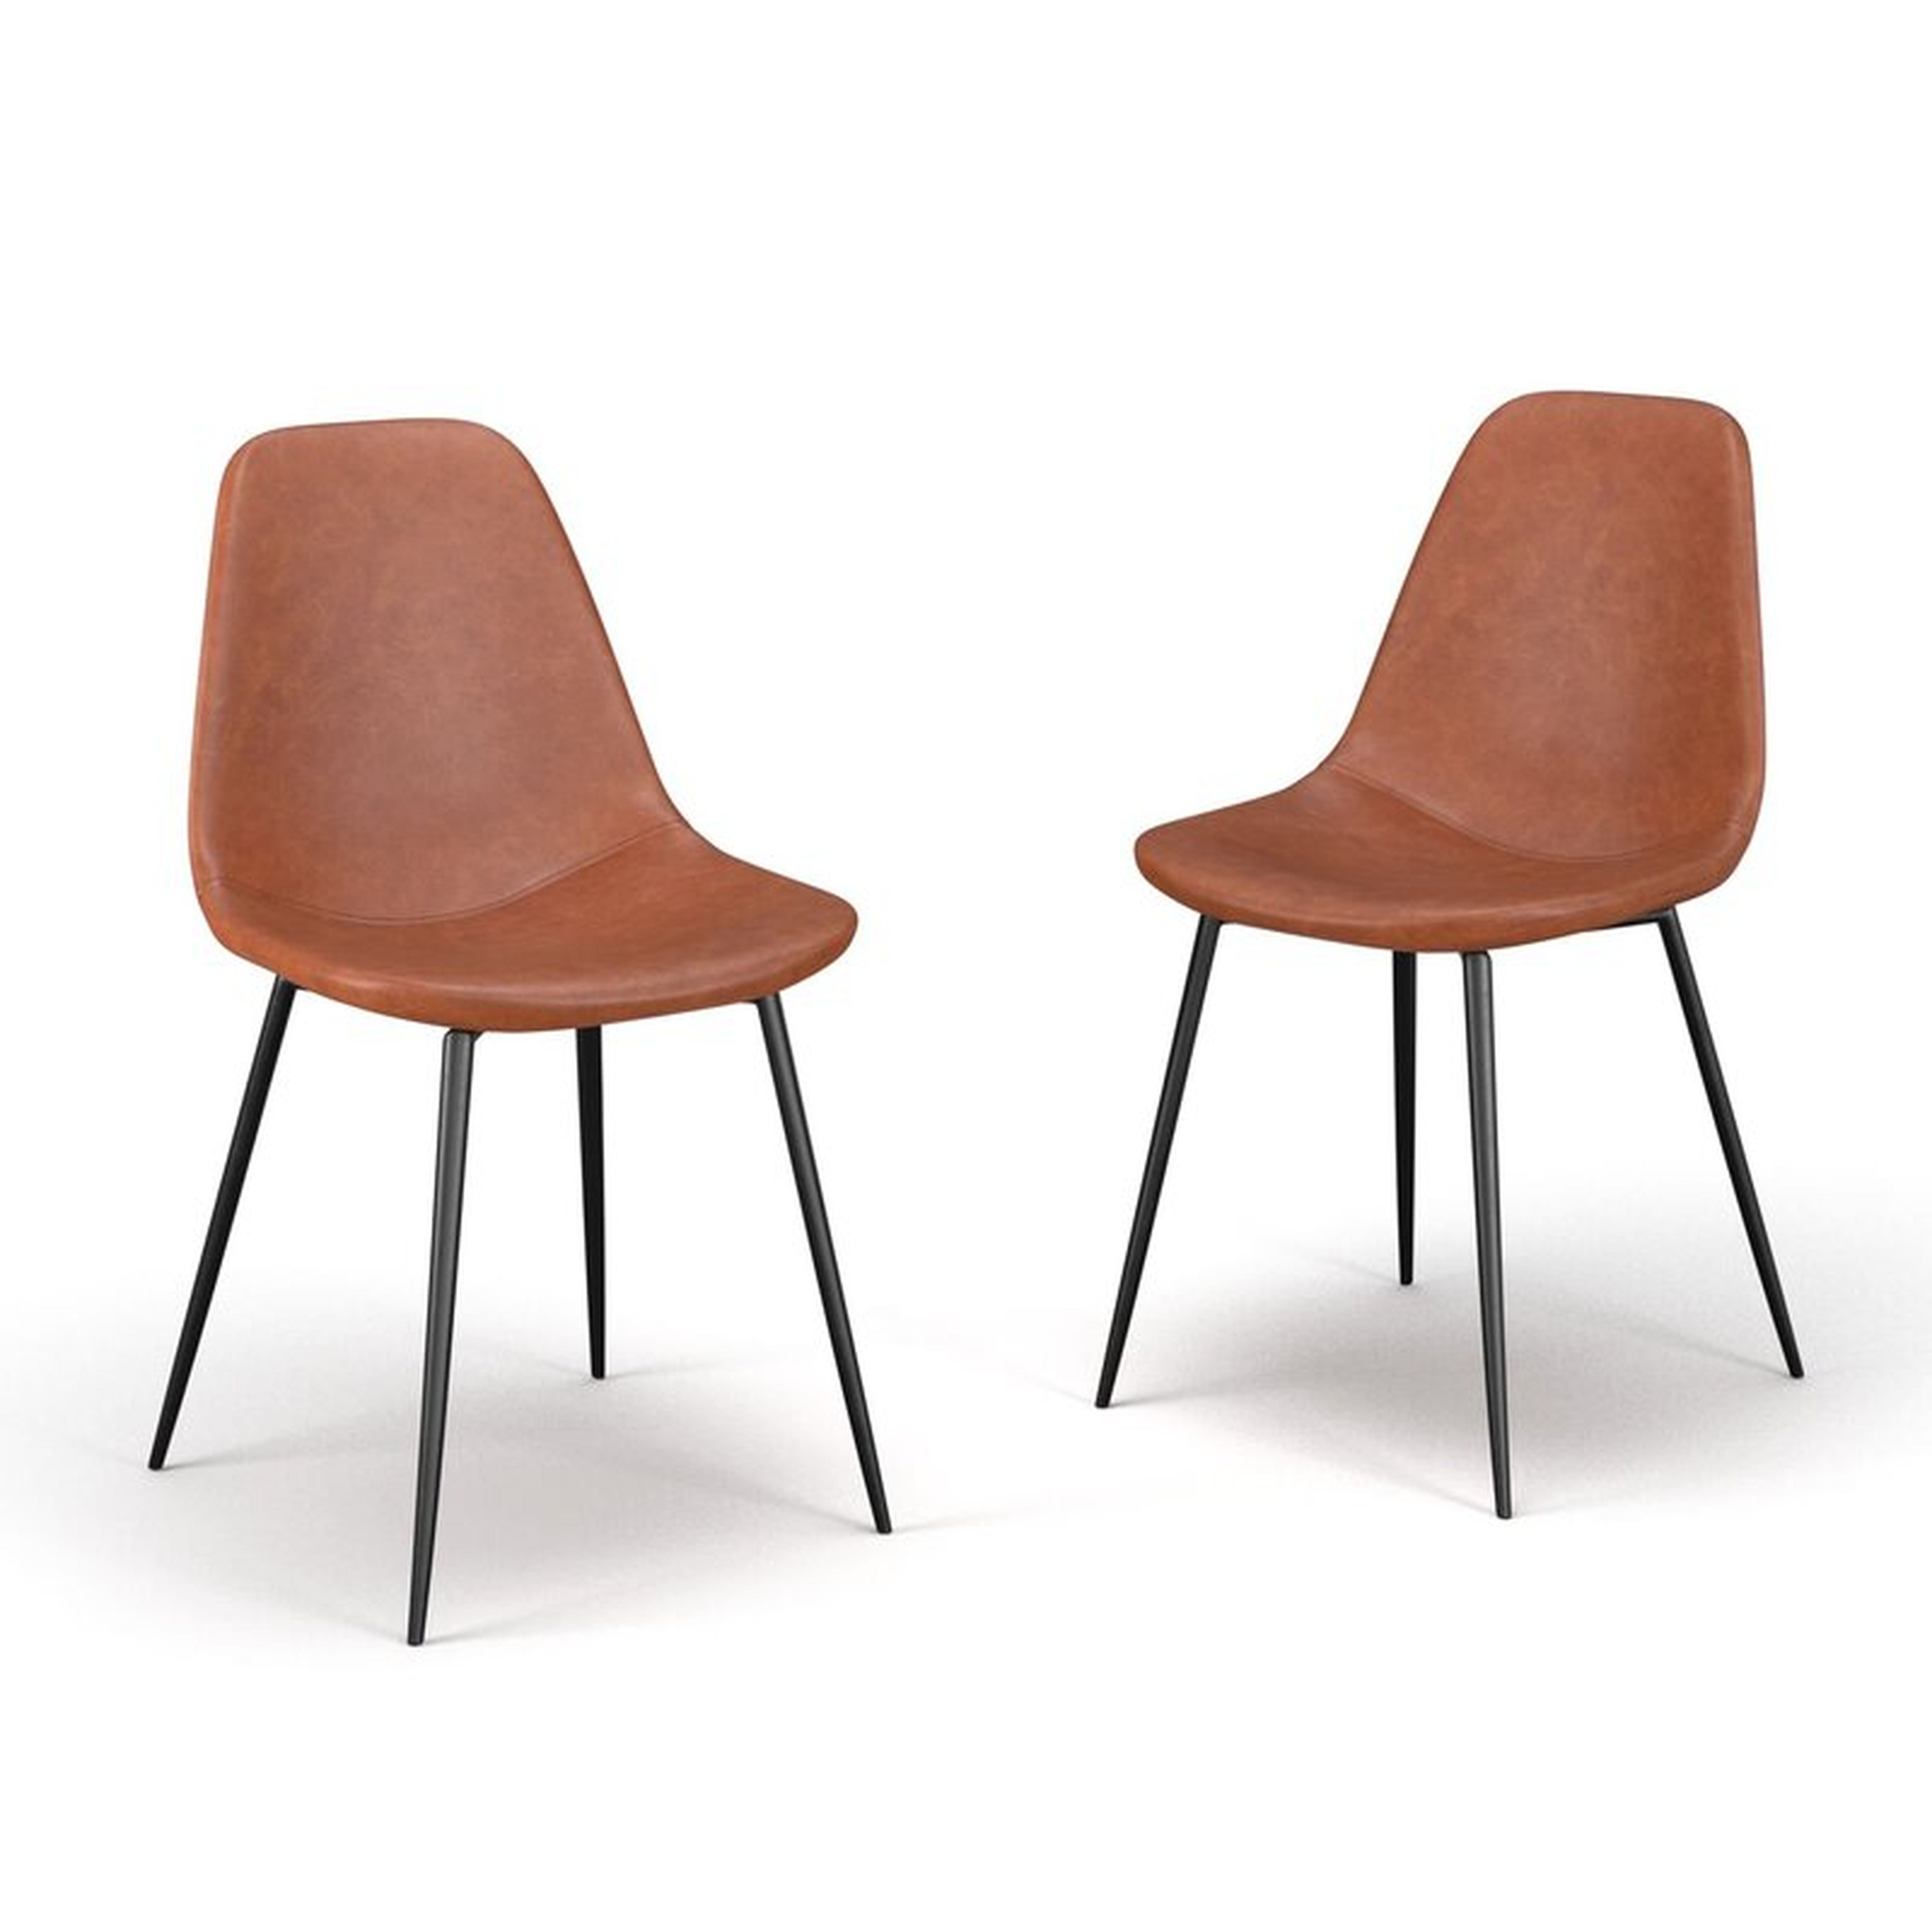 Kody Upholstered Side Chair leather set of 2 - Wayfair